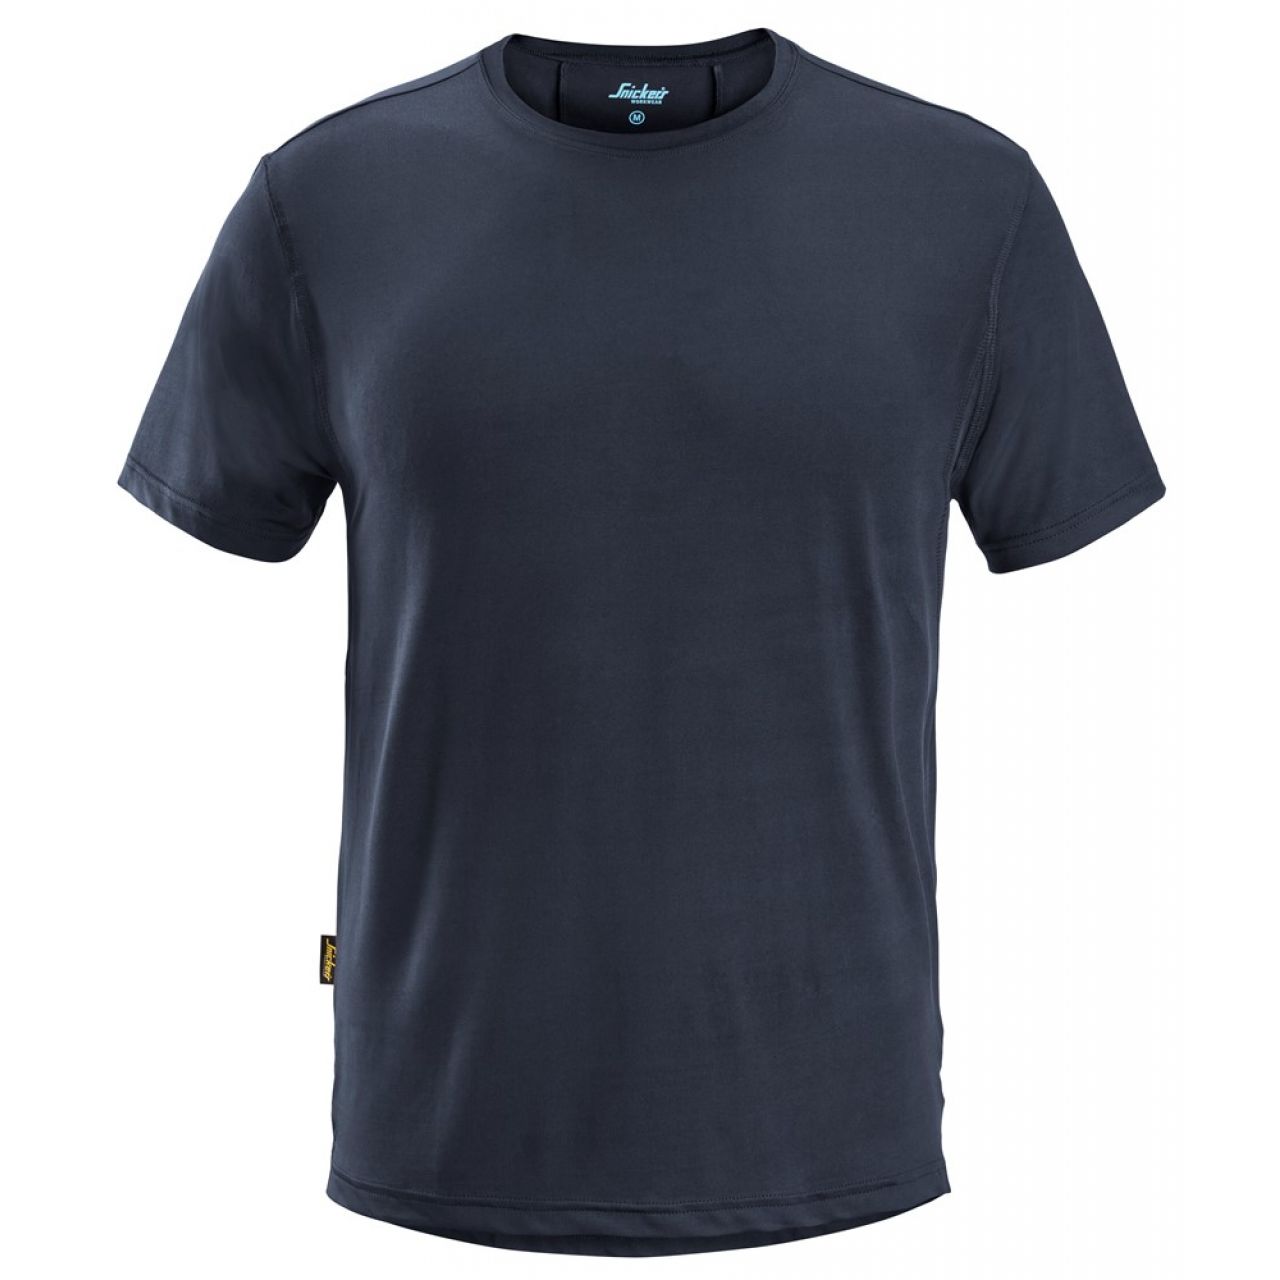 2511 Camiseta de manga corta LiteWork azul marino talla L